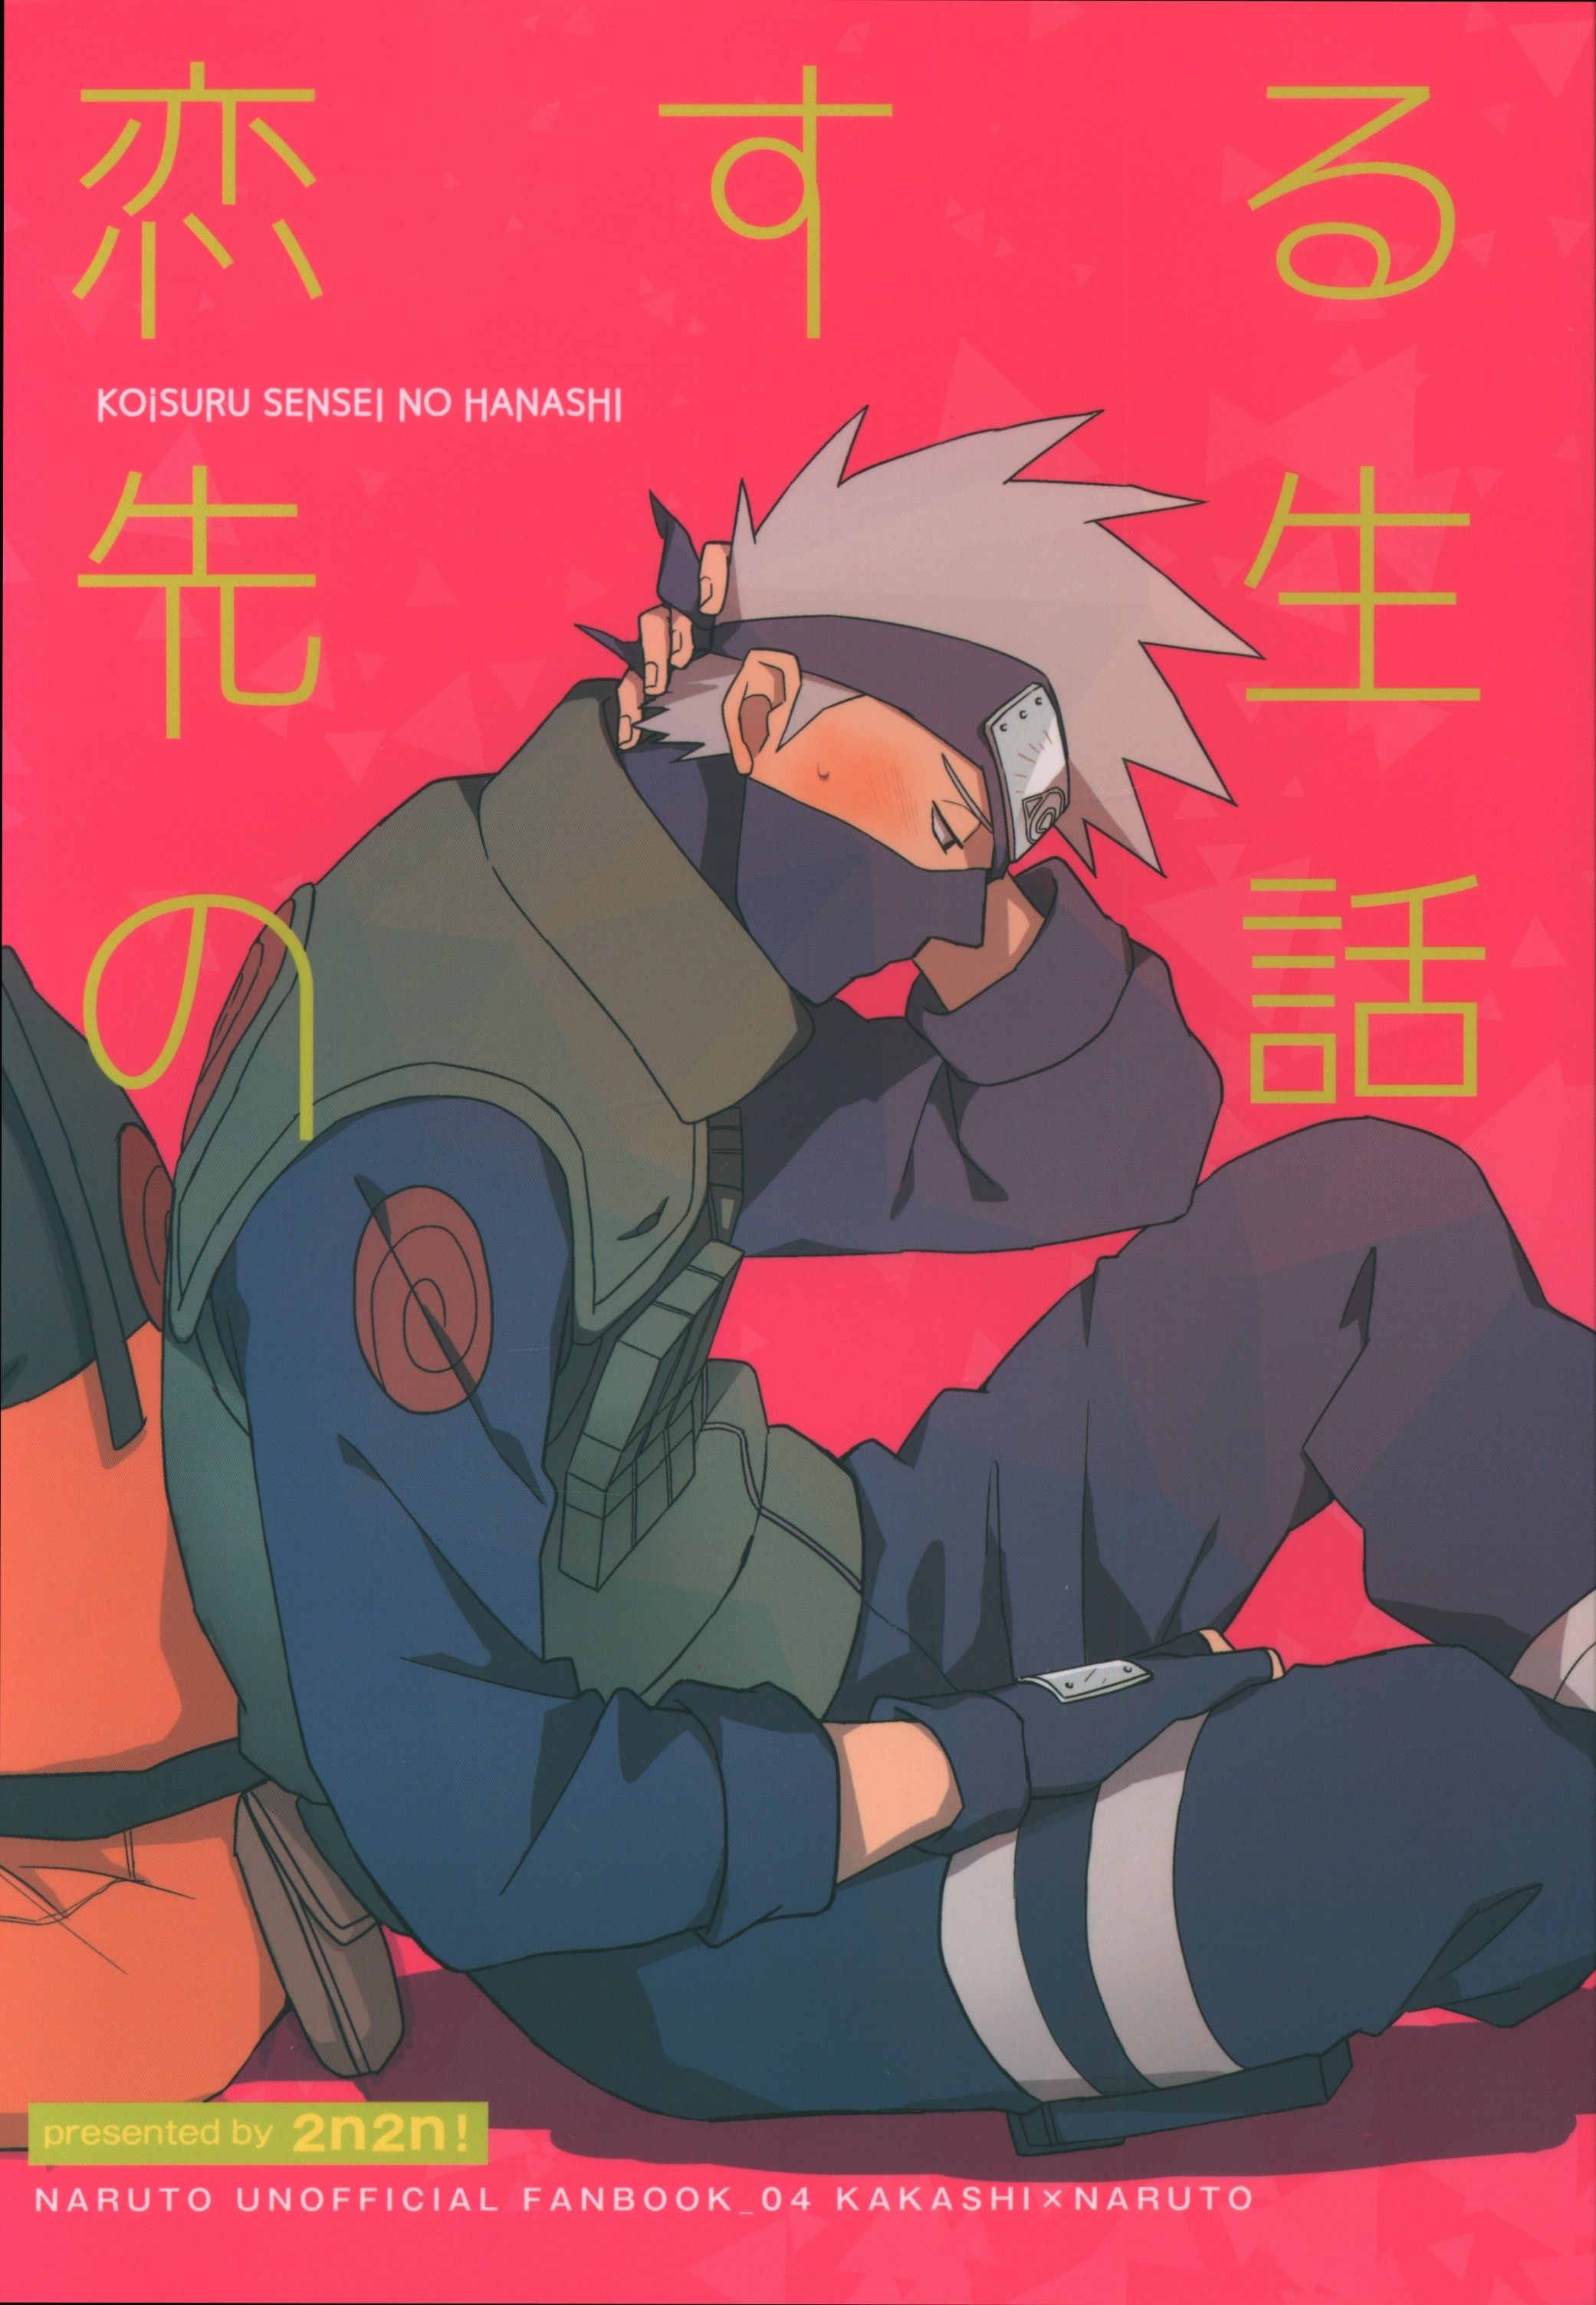 USED) Doujinshi / Kakashi x Naruto (恋する先生の話) / 2n2n!. Buy from Otaku Republic Shop for Japanese Anime Merchandise